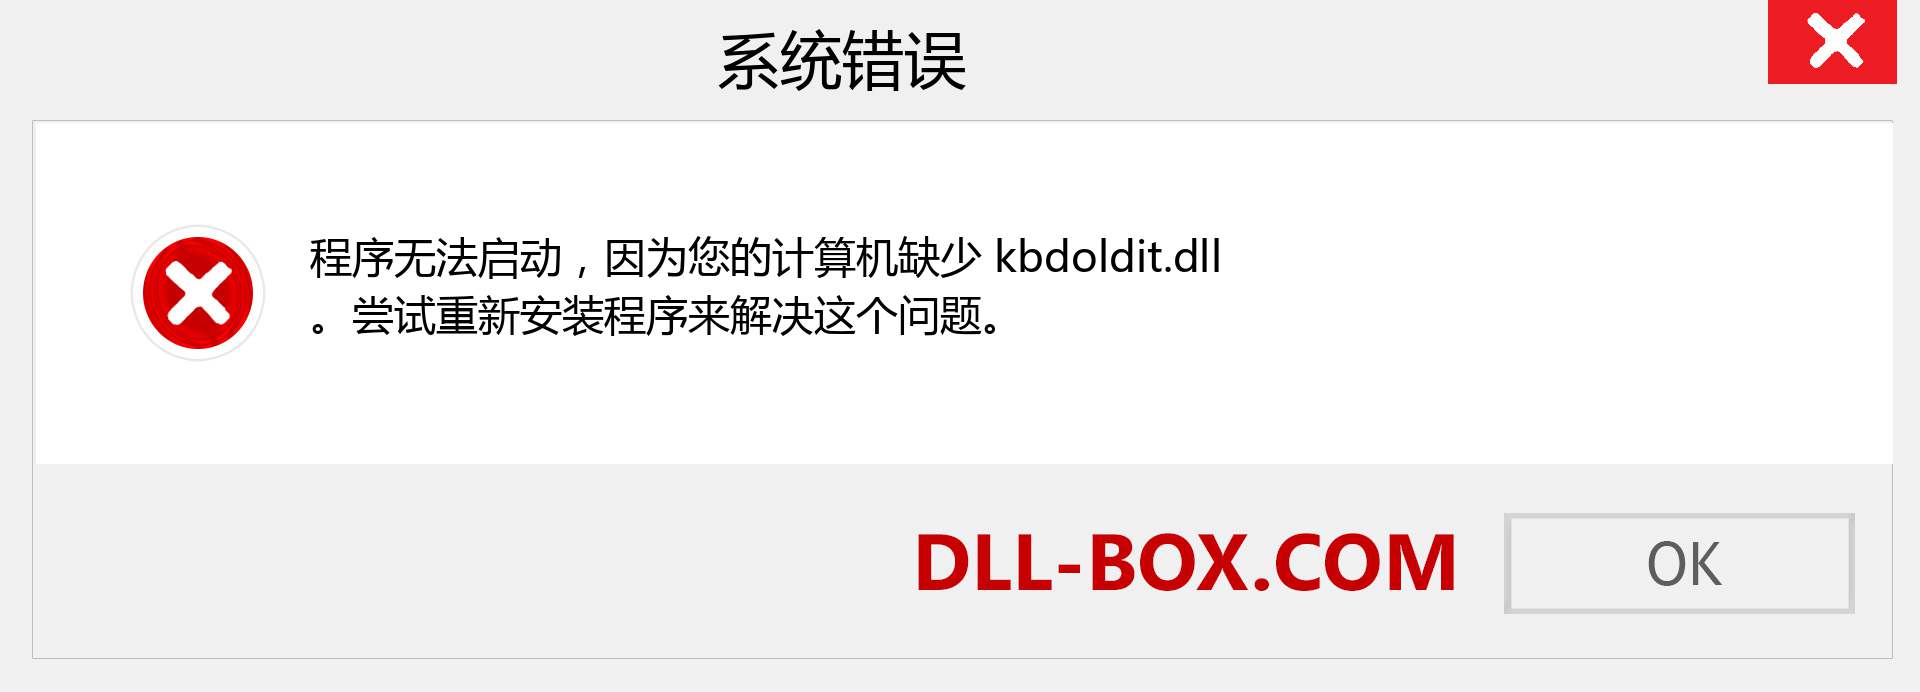 kbdoldit.dll 文件丢失？。 适用于 Windows 7、8、10 的下载 - 修复 Windows、照片、图像上的 kbdoldit dll 丢失错误